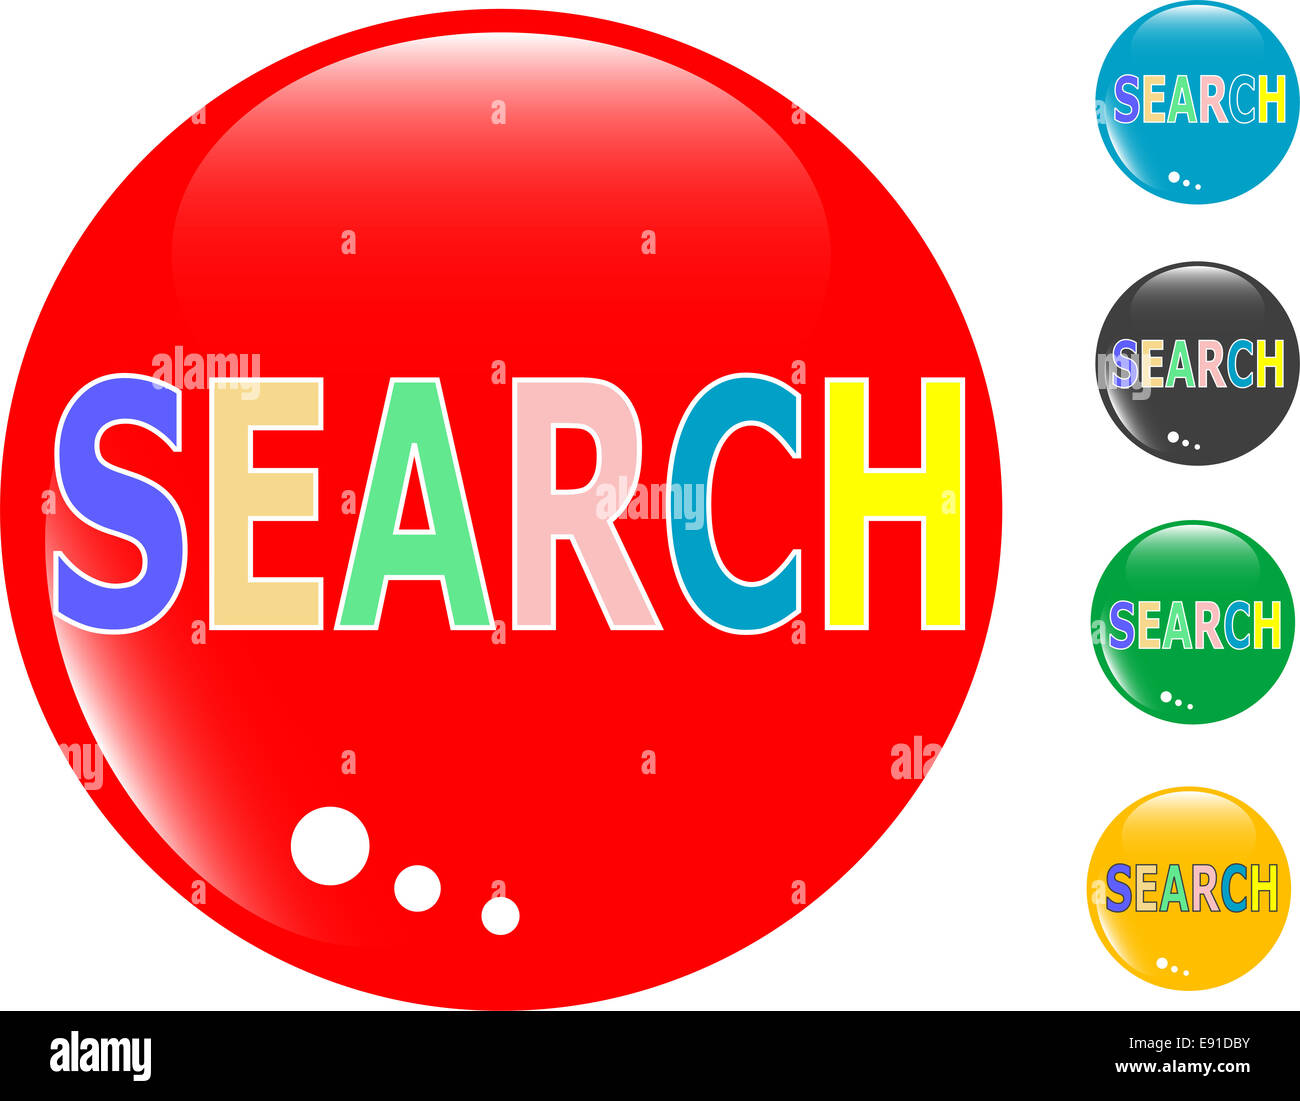 Search glass button icon Stock Photo